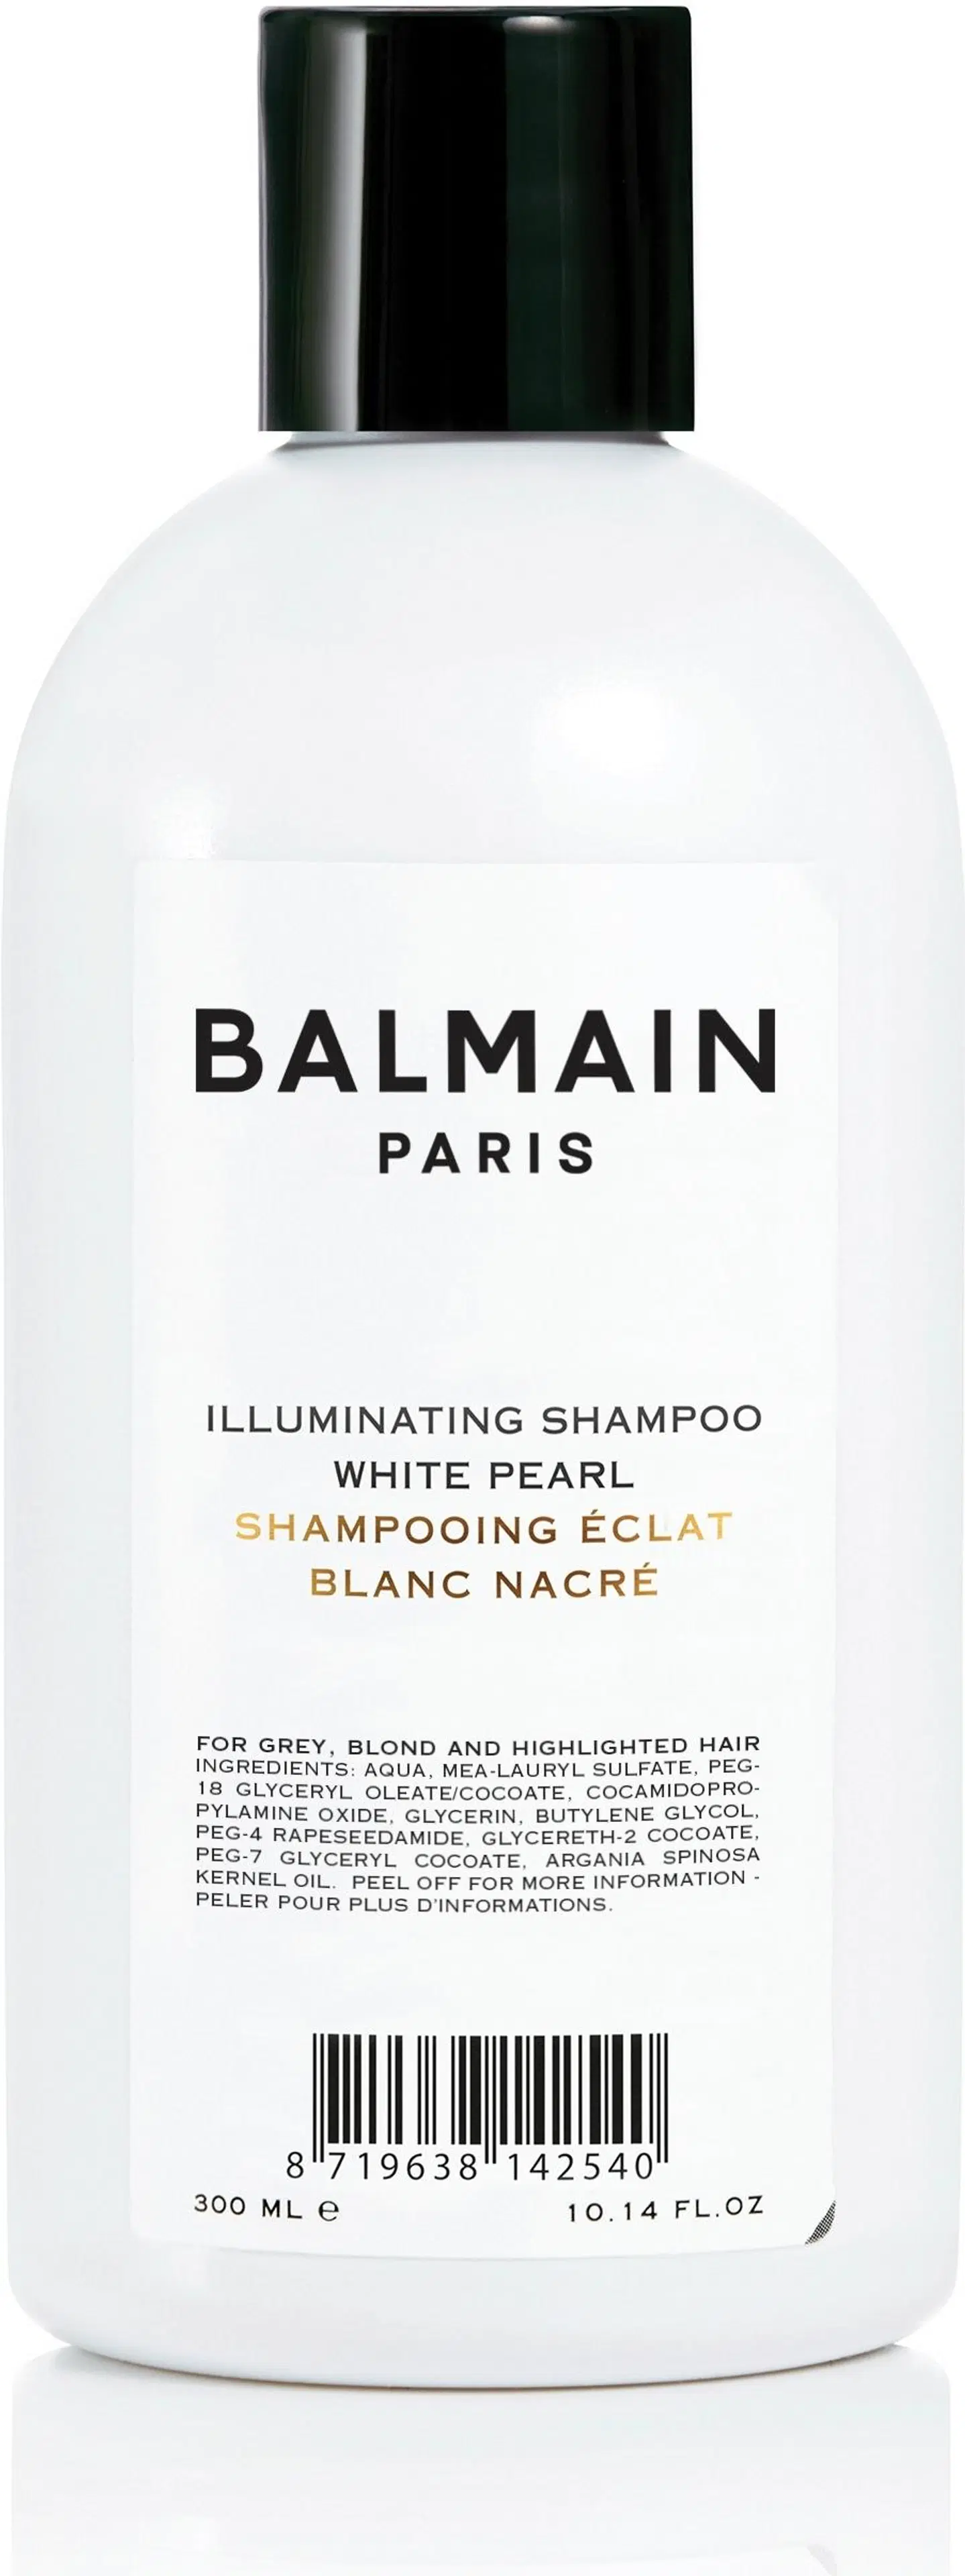 Balmain Paris Illuminating White Pearl shampoo 300 ml